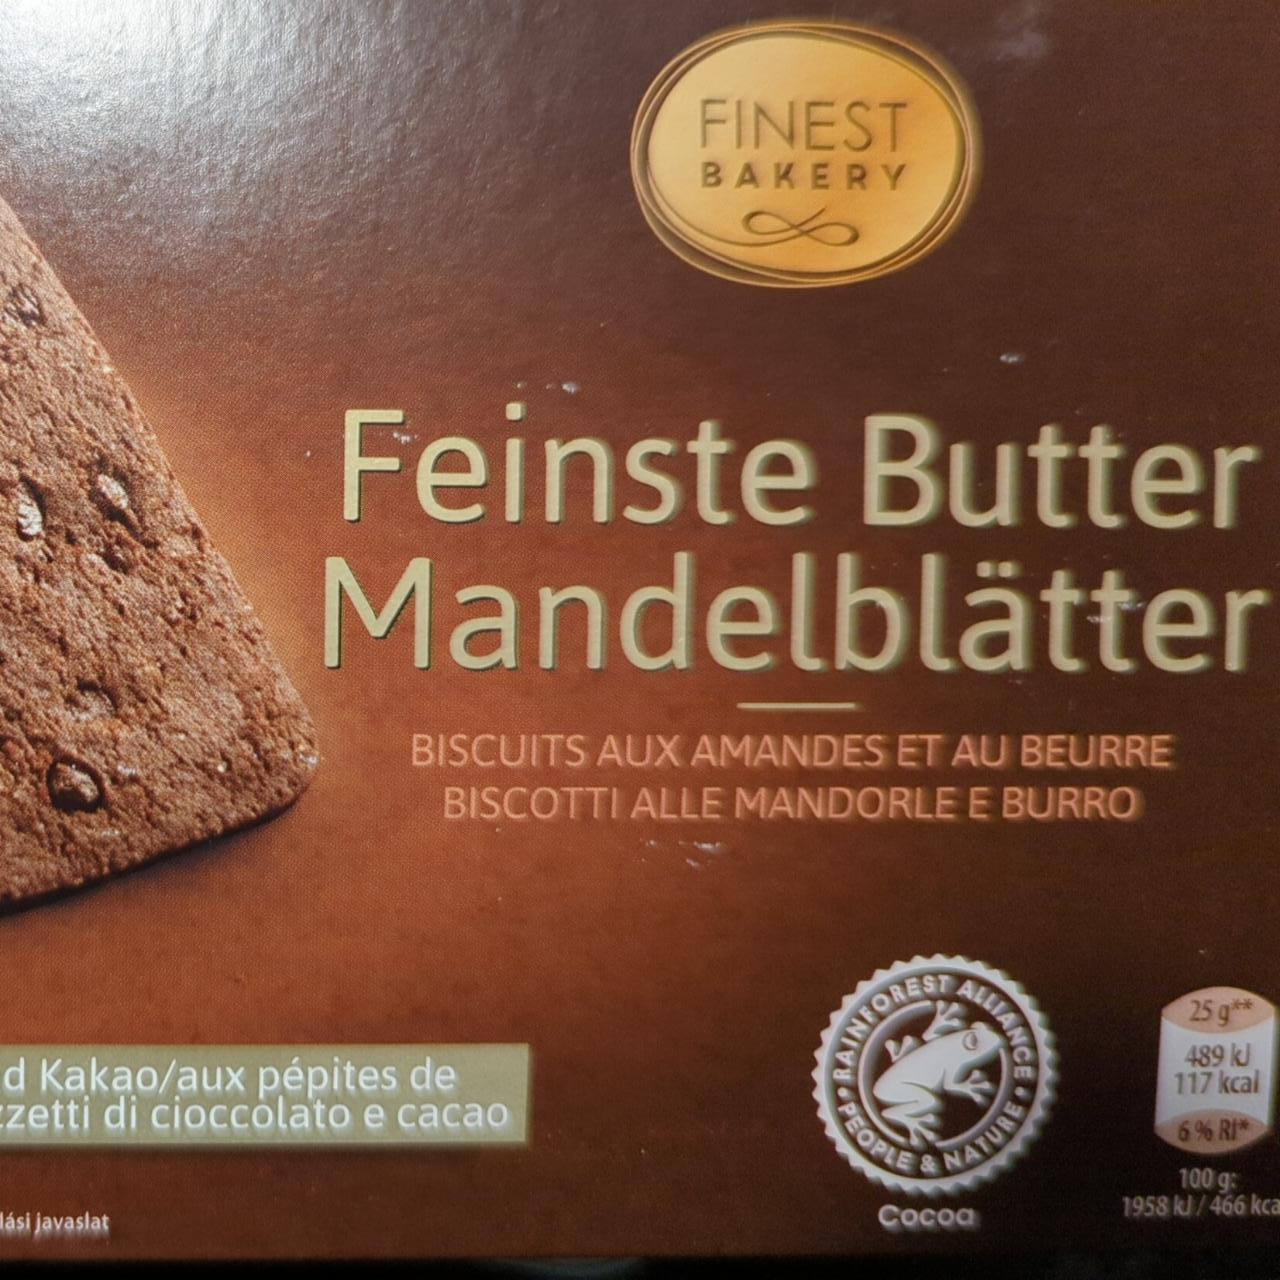 Fotografie - Feinste Butter Mandelblätter Finest Bakery